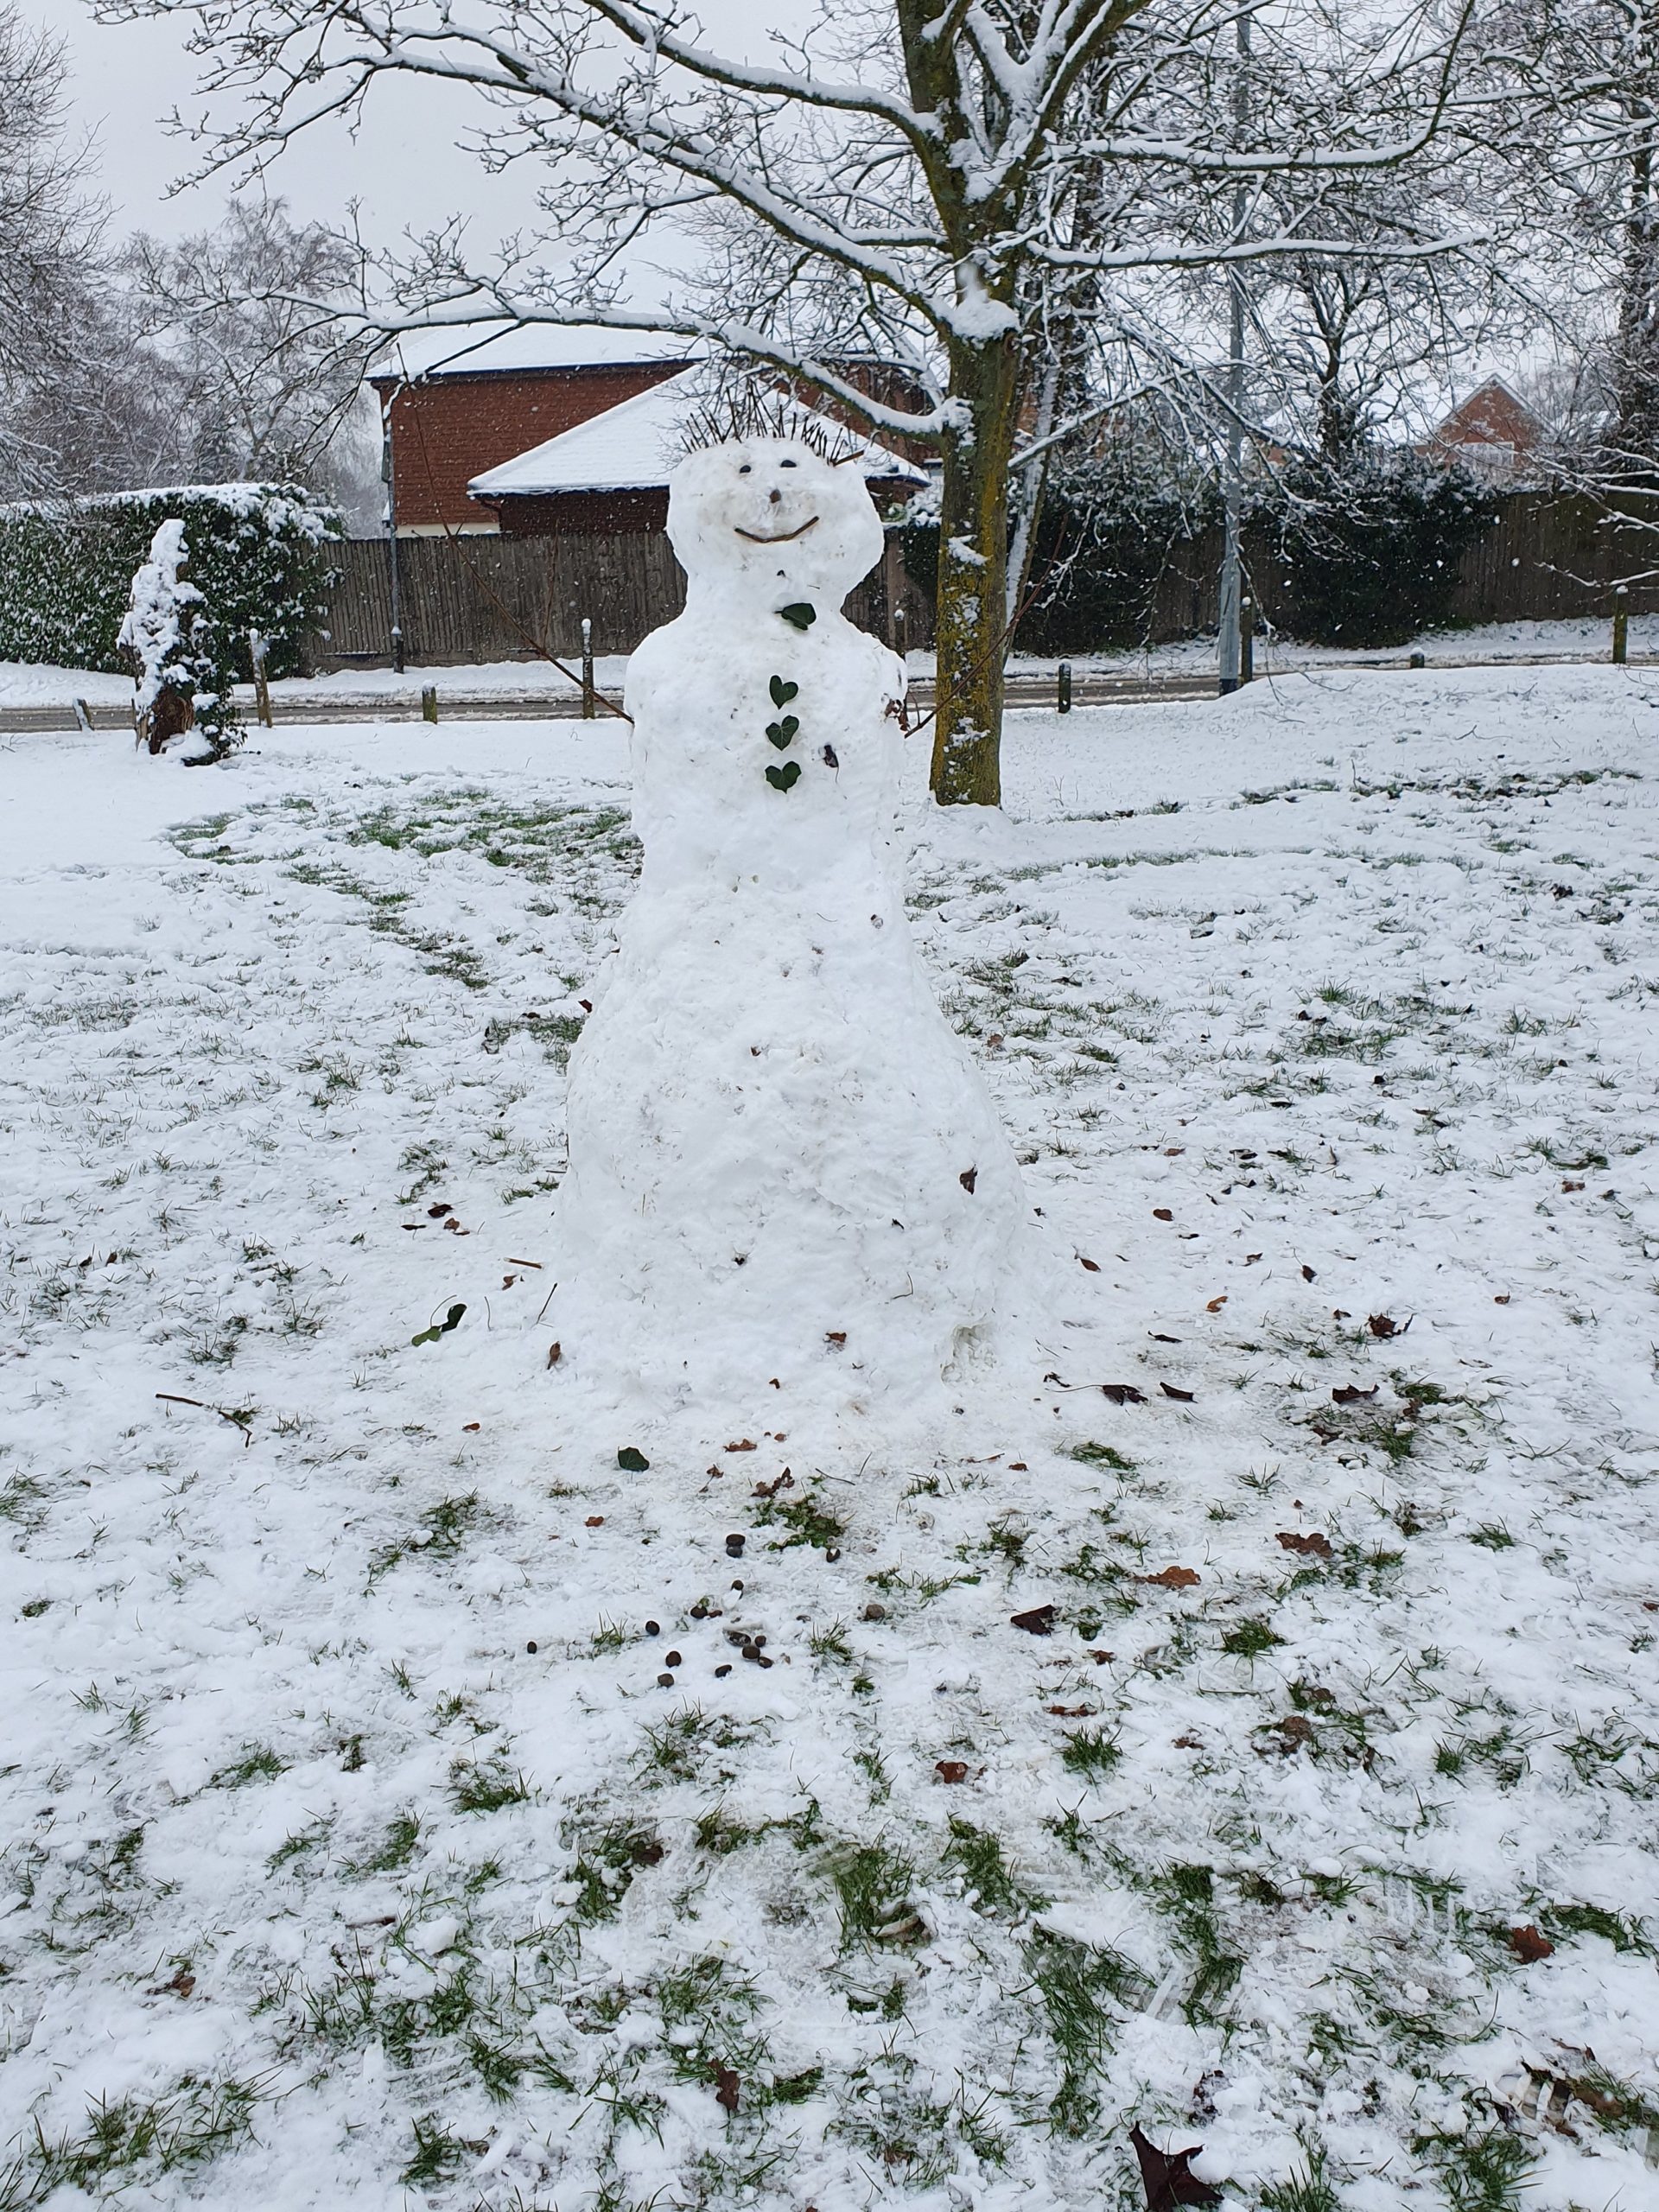 A snowman at Bearwood Recreation Ground